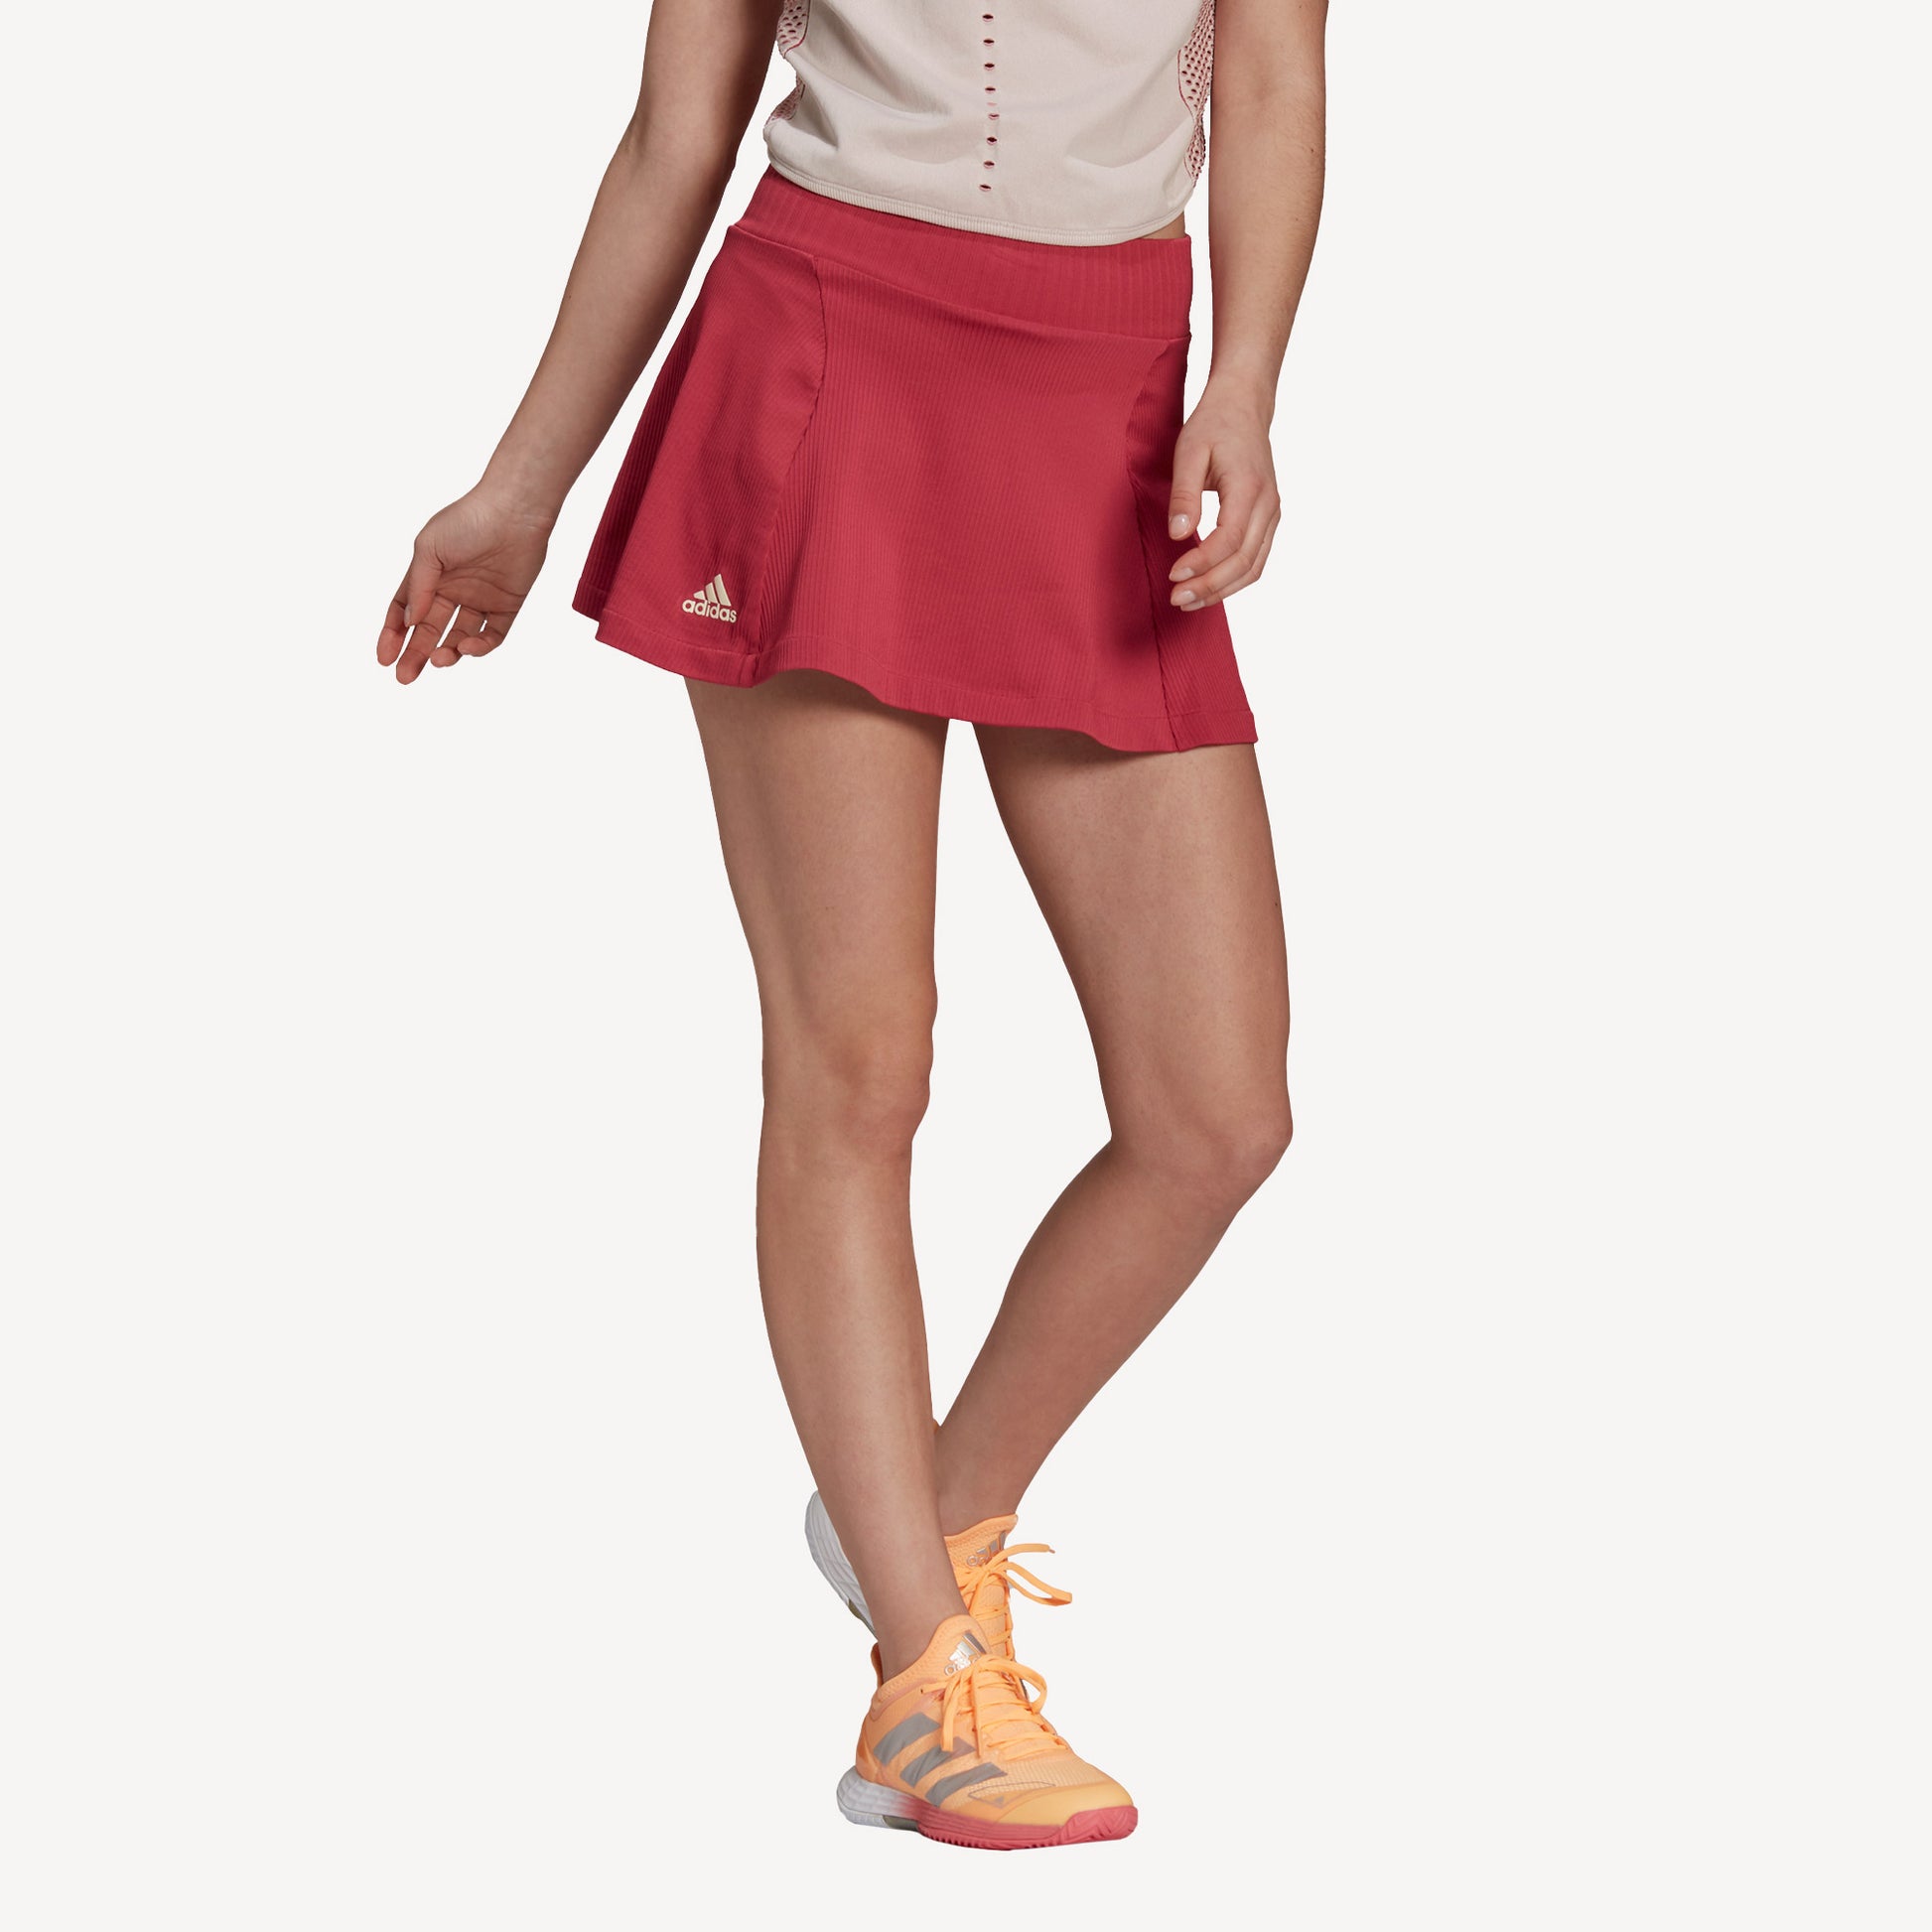 adidas Primeknit Primeblue Women's Tennis Skirt Pink (1)